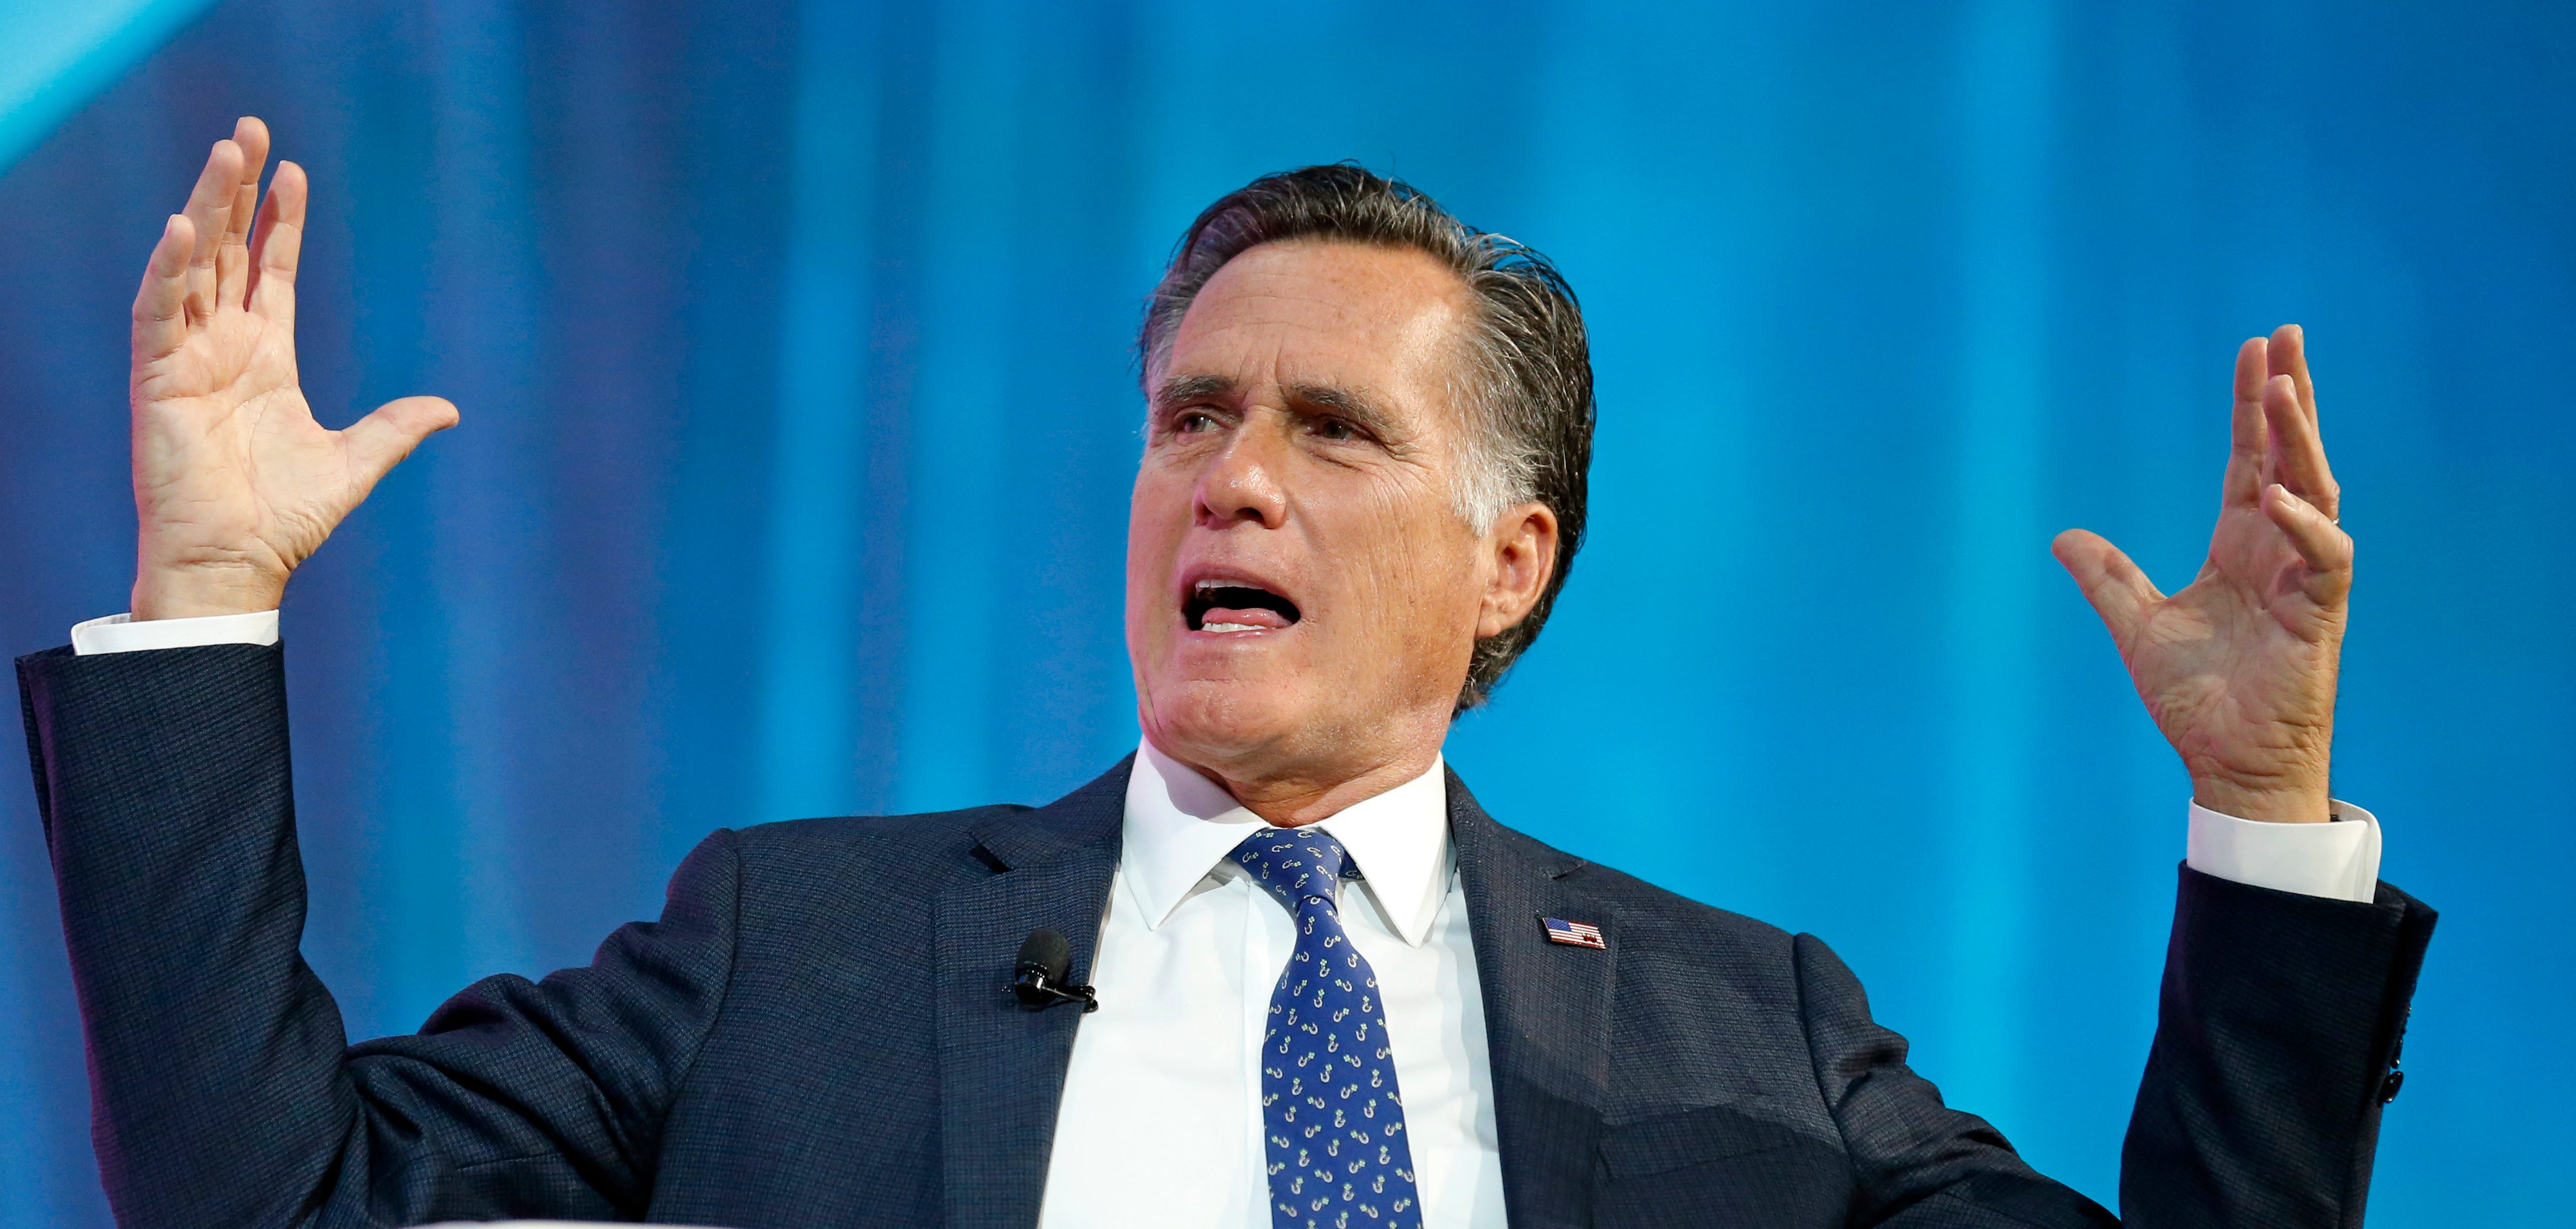 Mitt Romney to make Utah Senate race announcement on Feb. 153200 x 1680